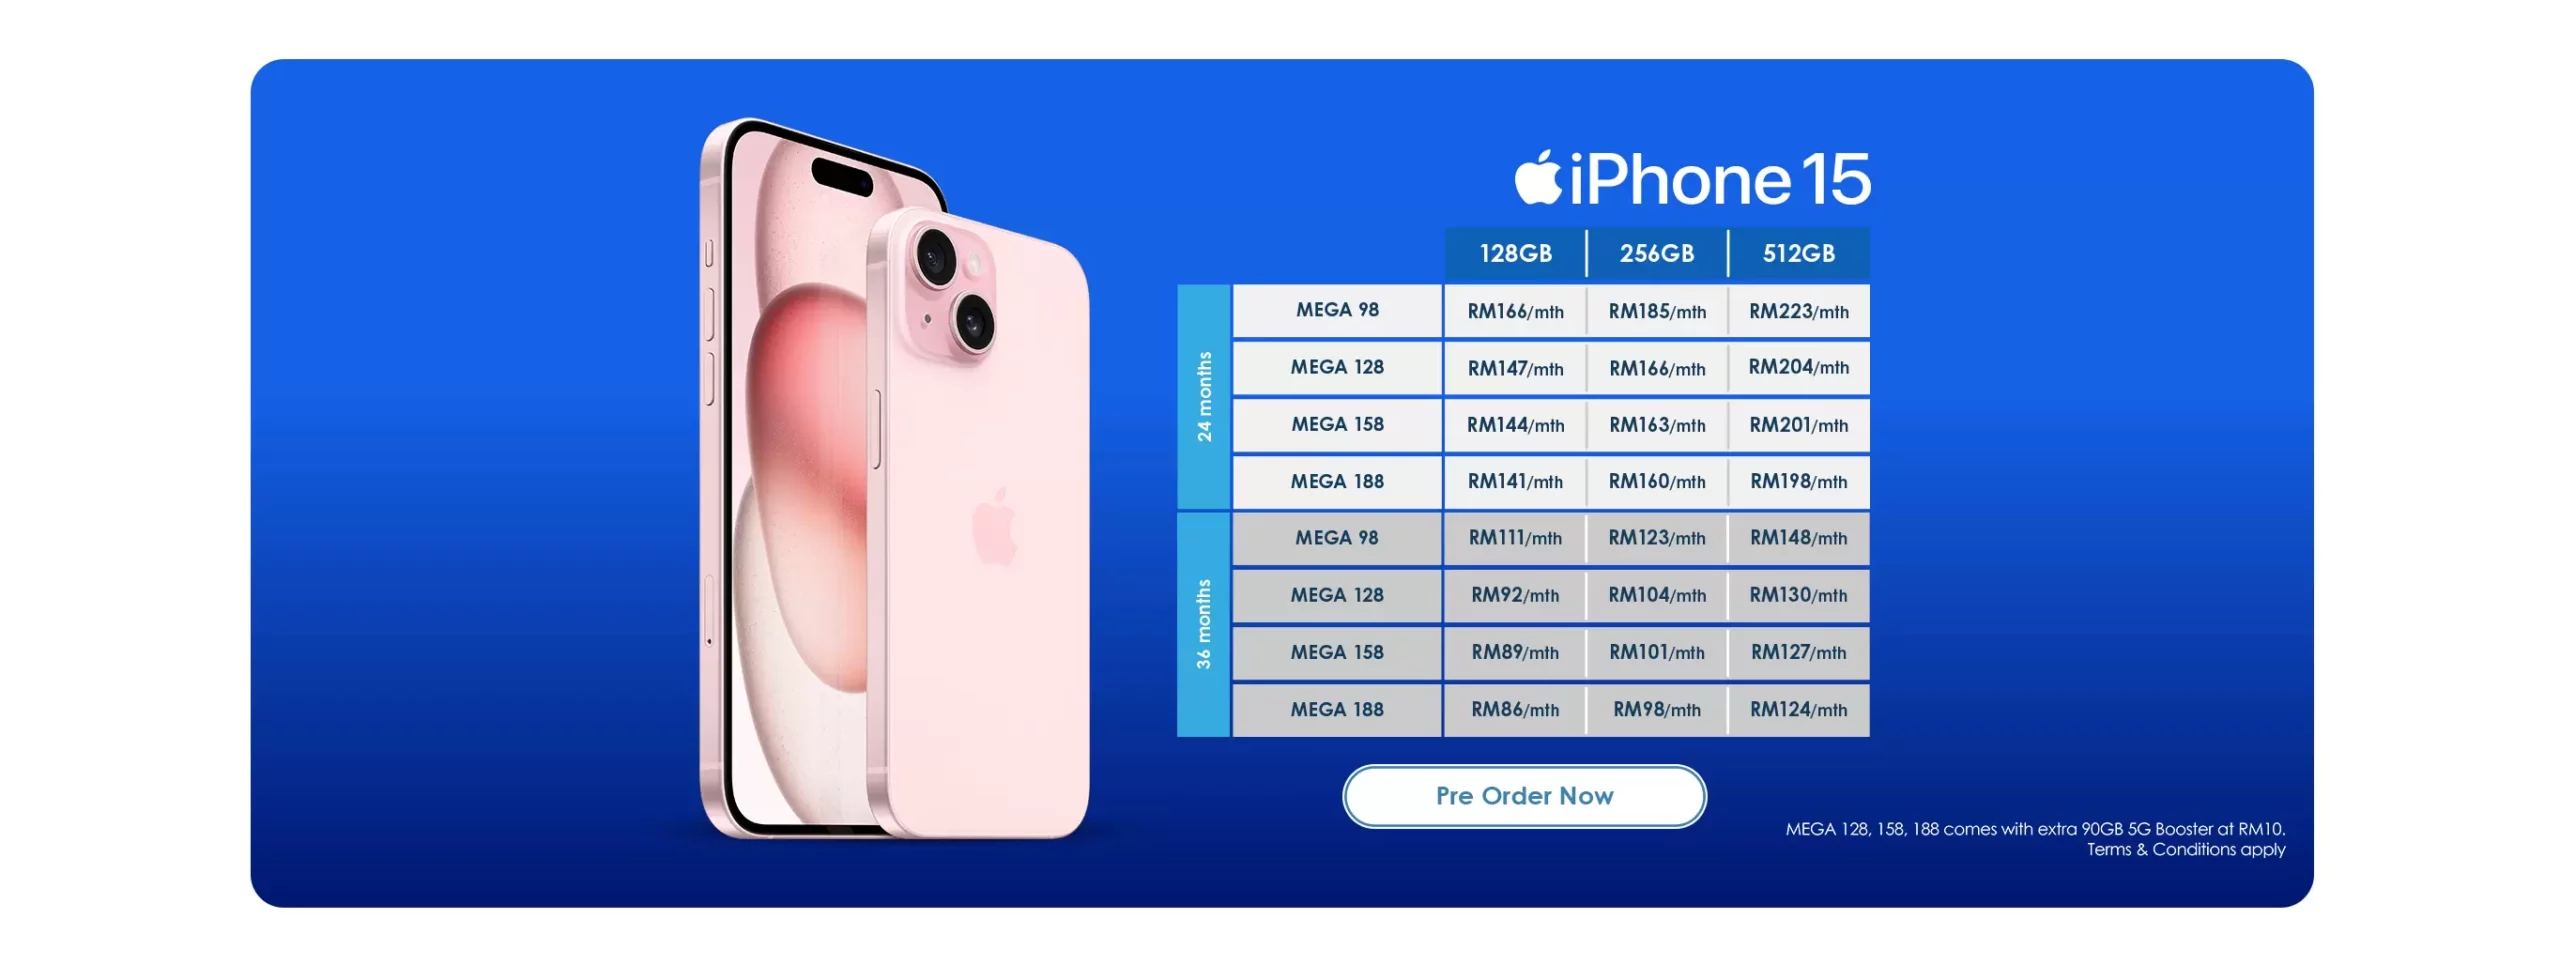 Celcom iphone 15 pricing & plan